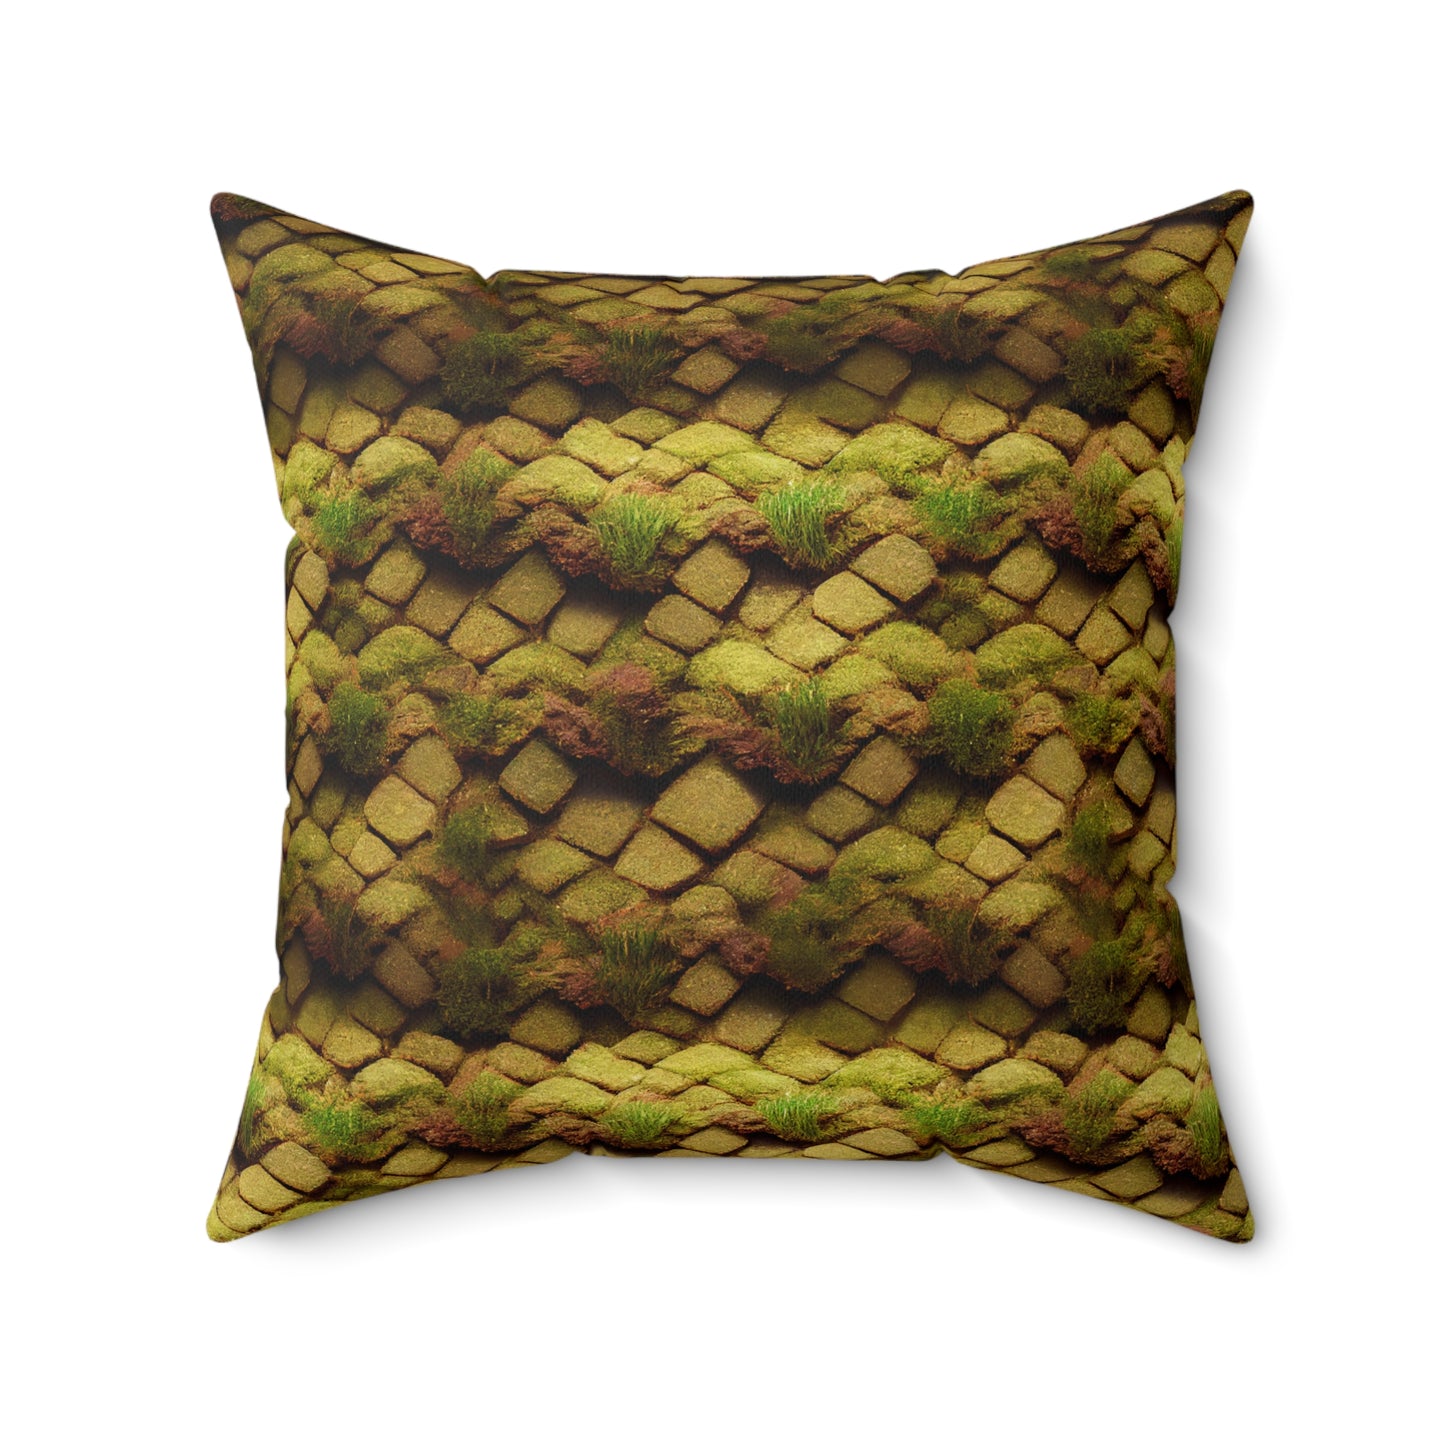 Mossy Brick Print Spun Polyester Square Pillow